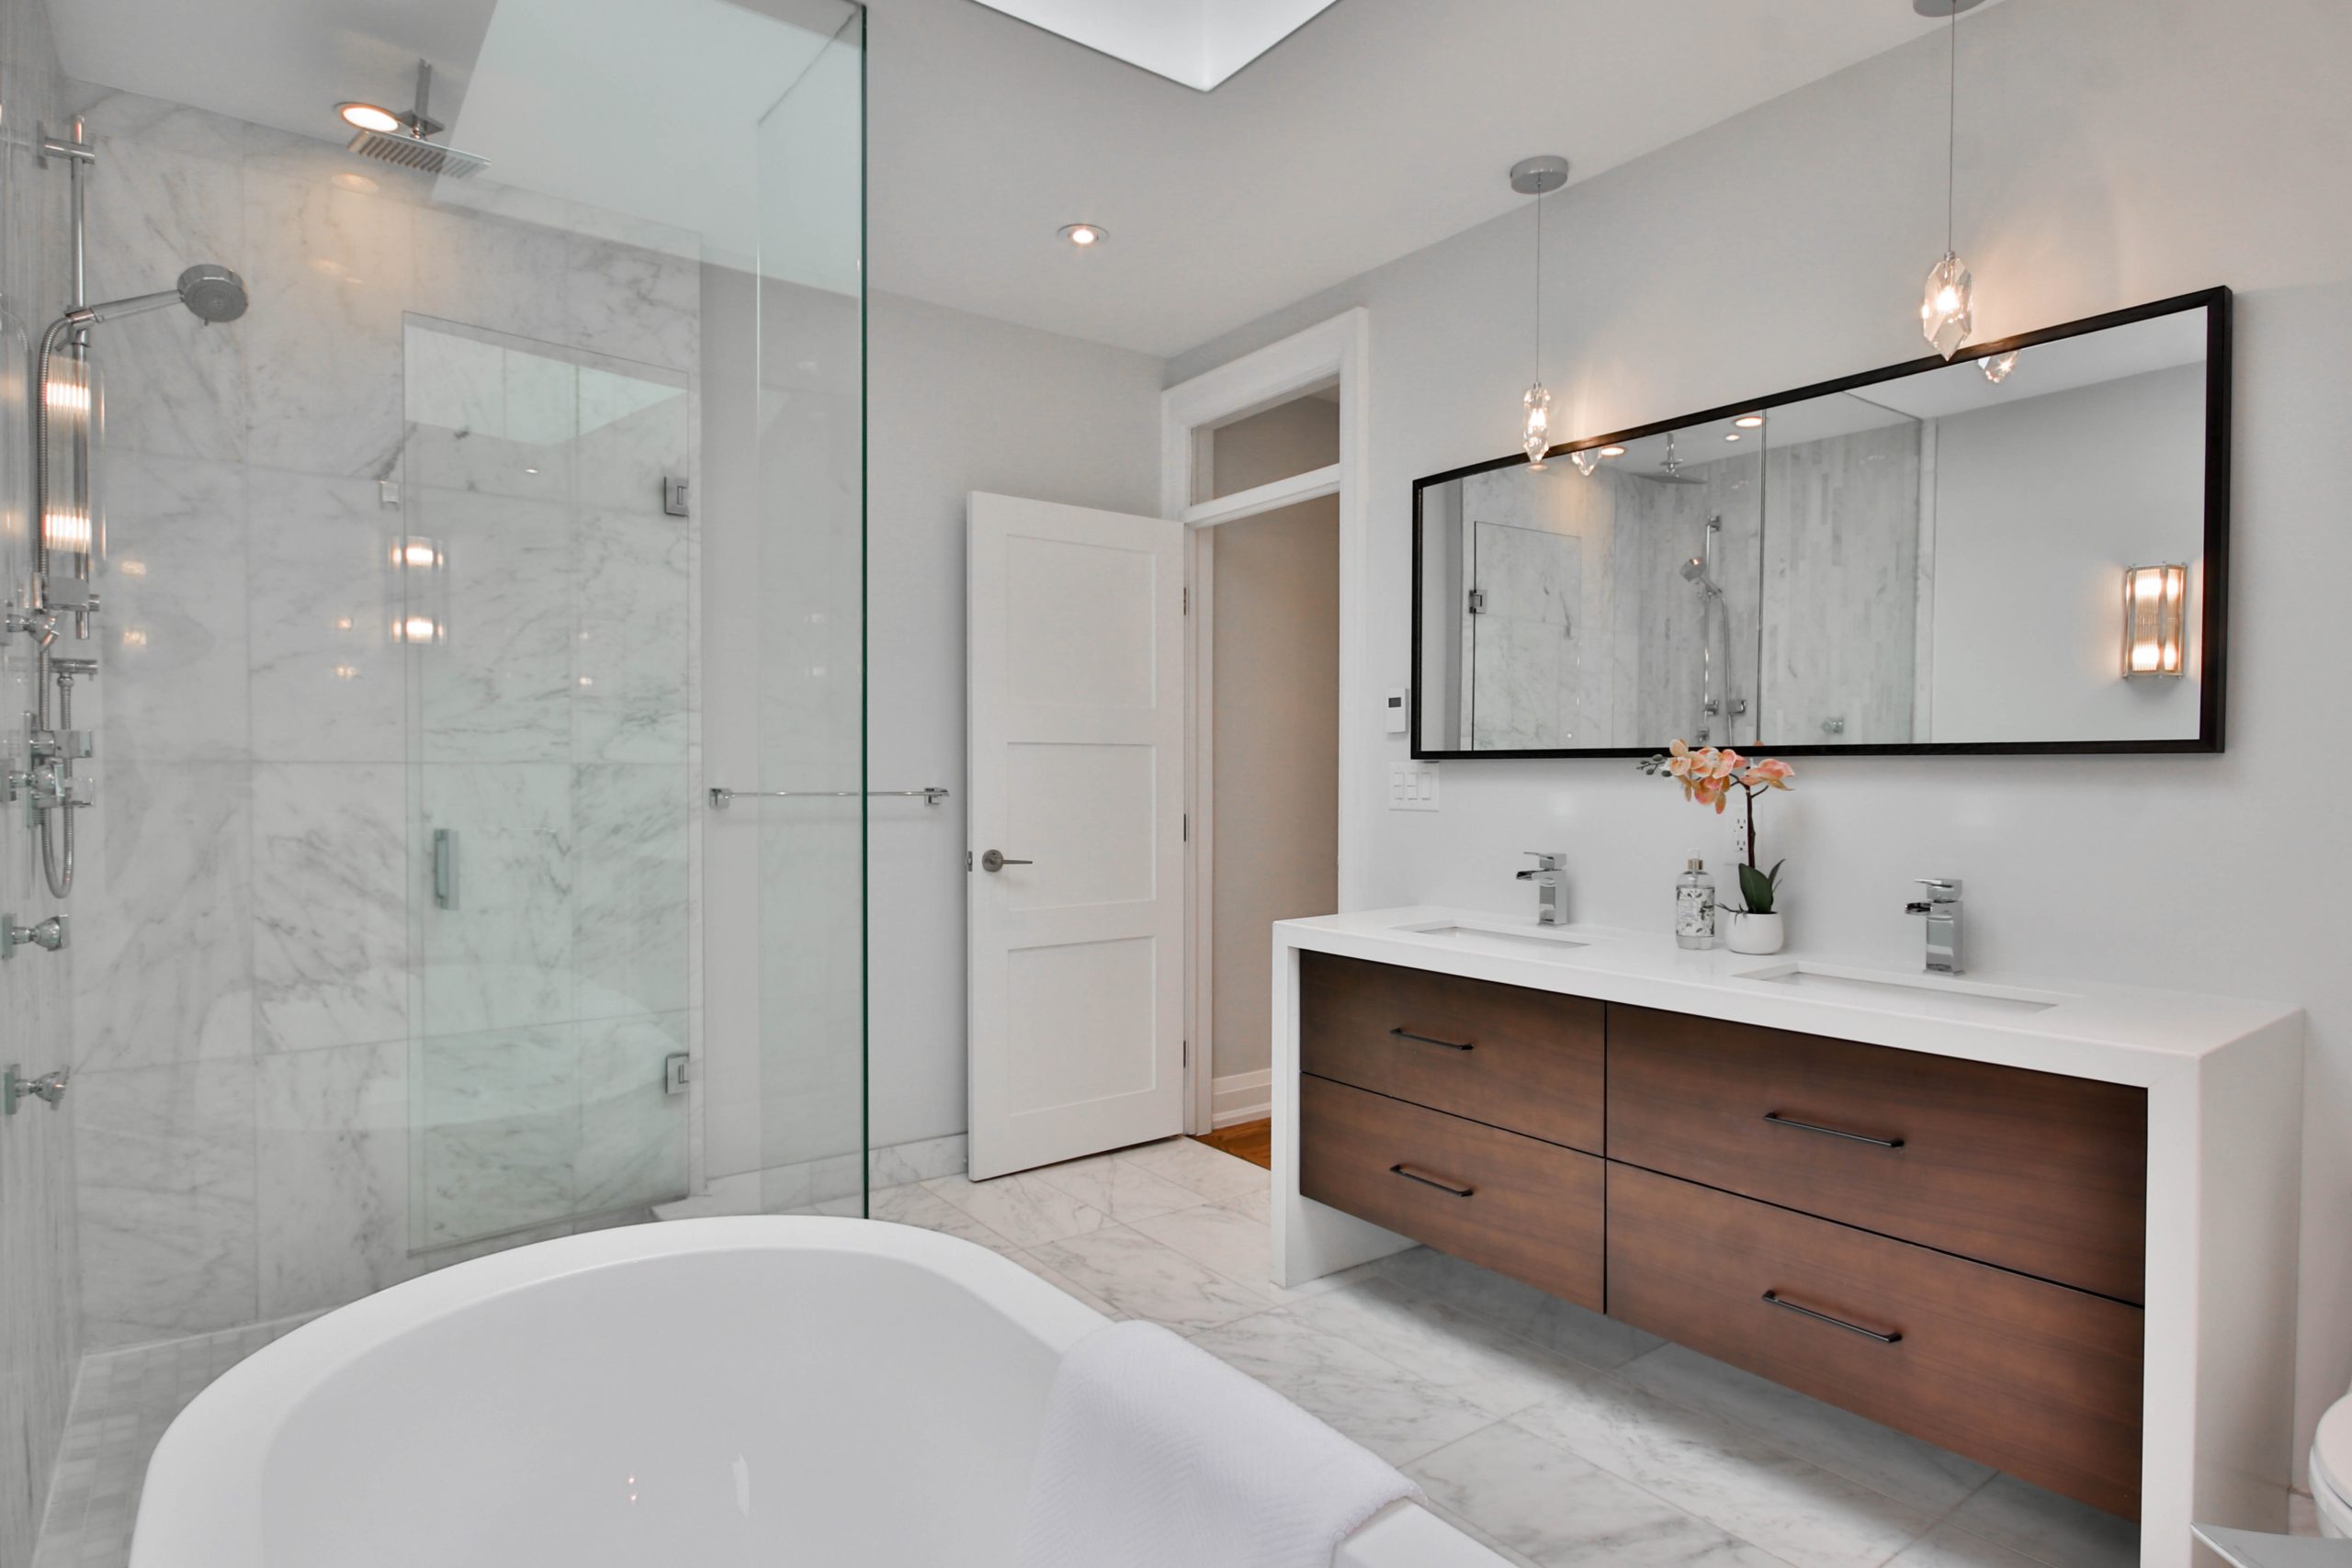 Bathroom Renovation, Freestanding Tub, Glass Shower, Freestanding Vanity